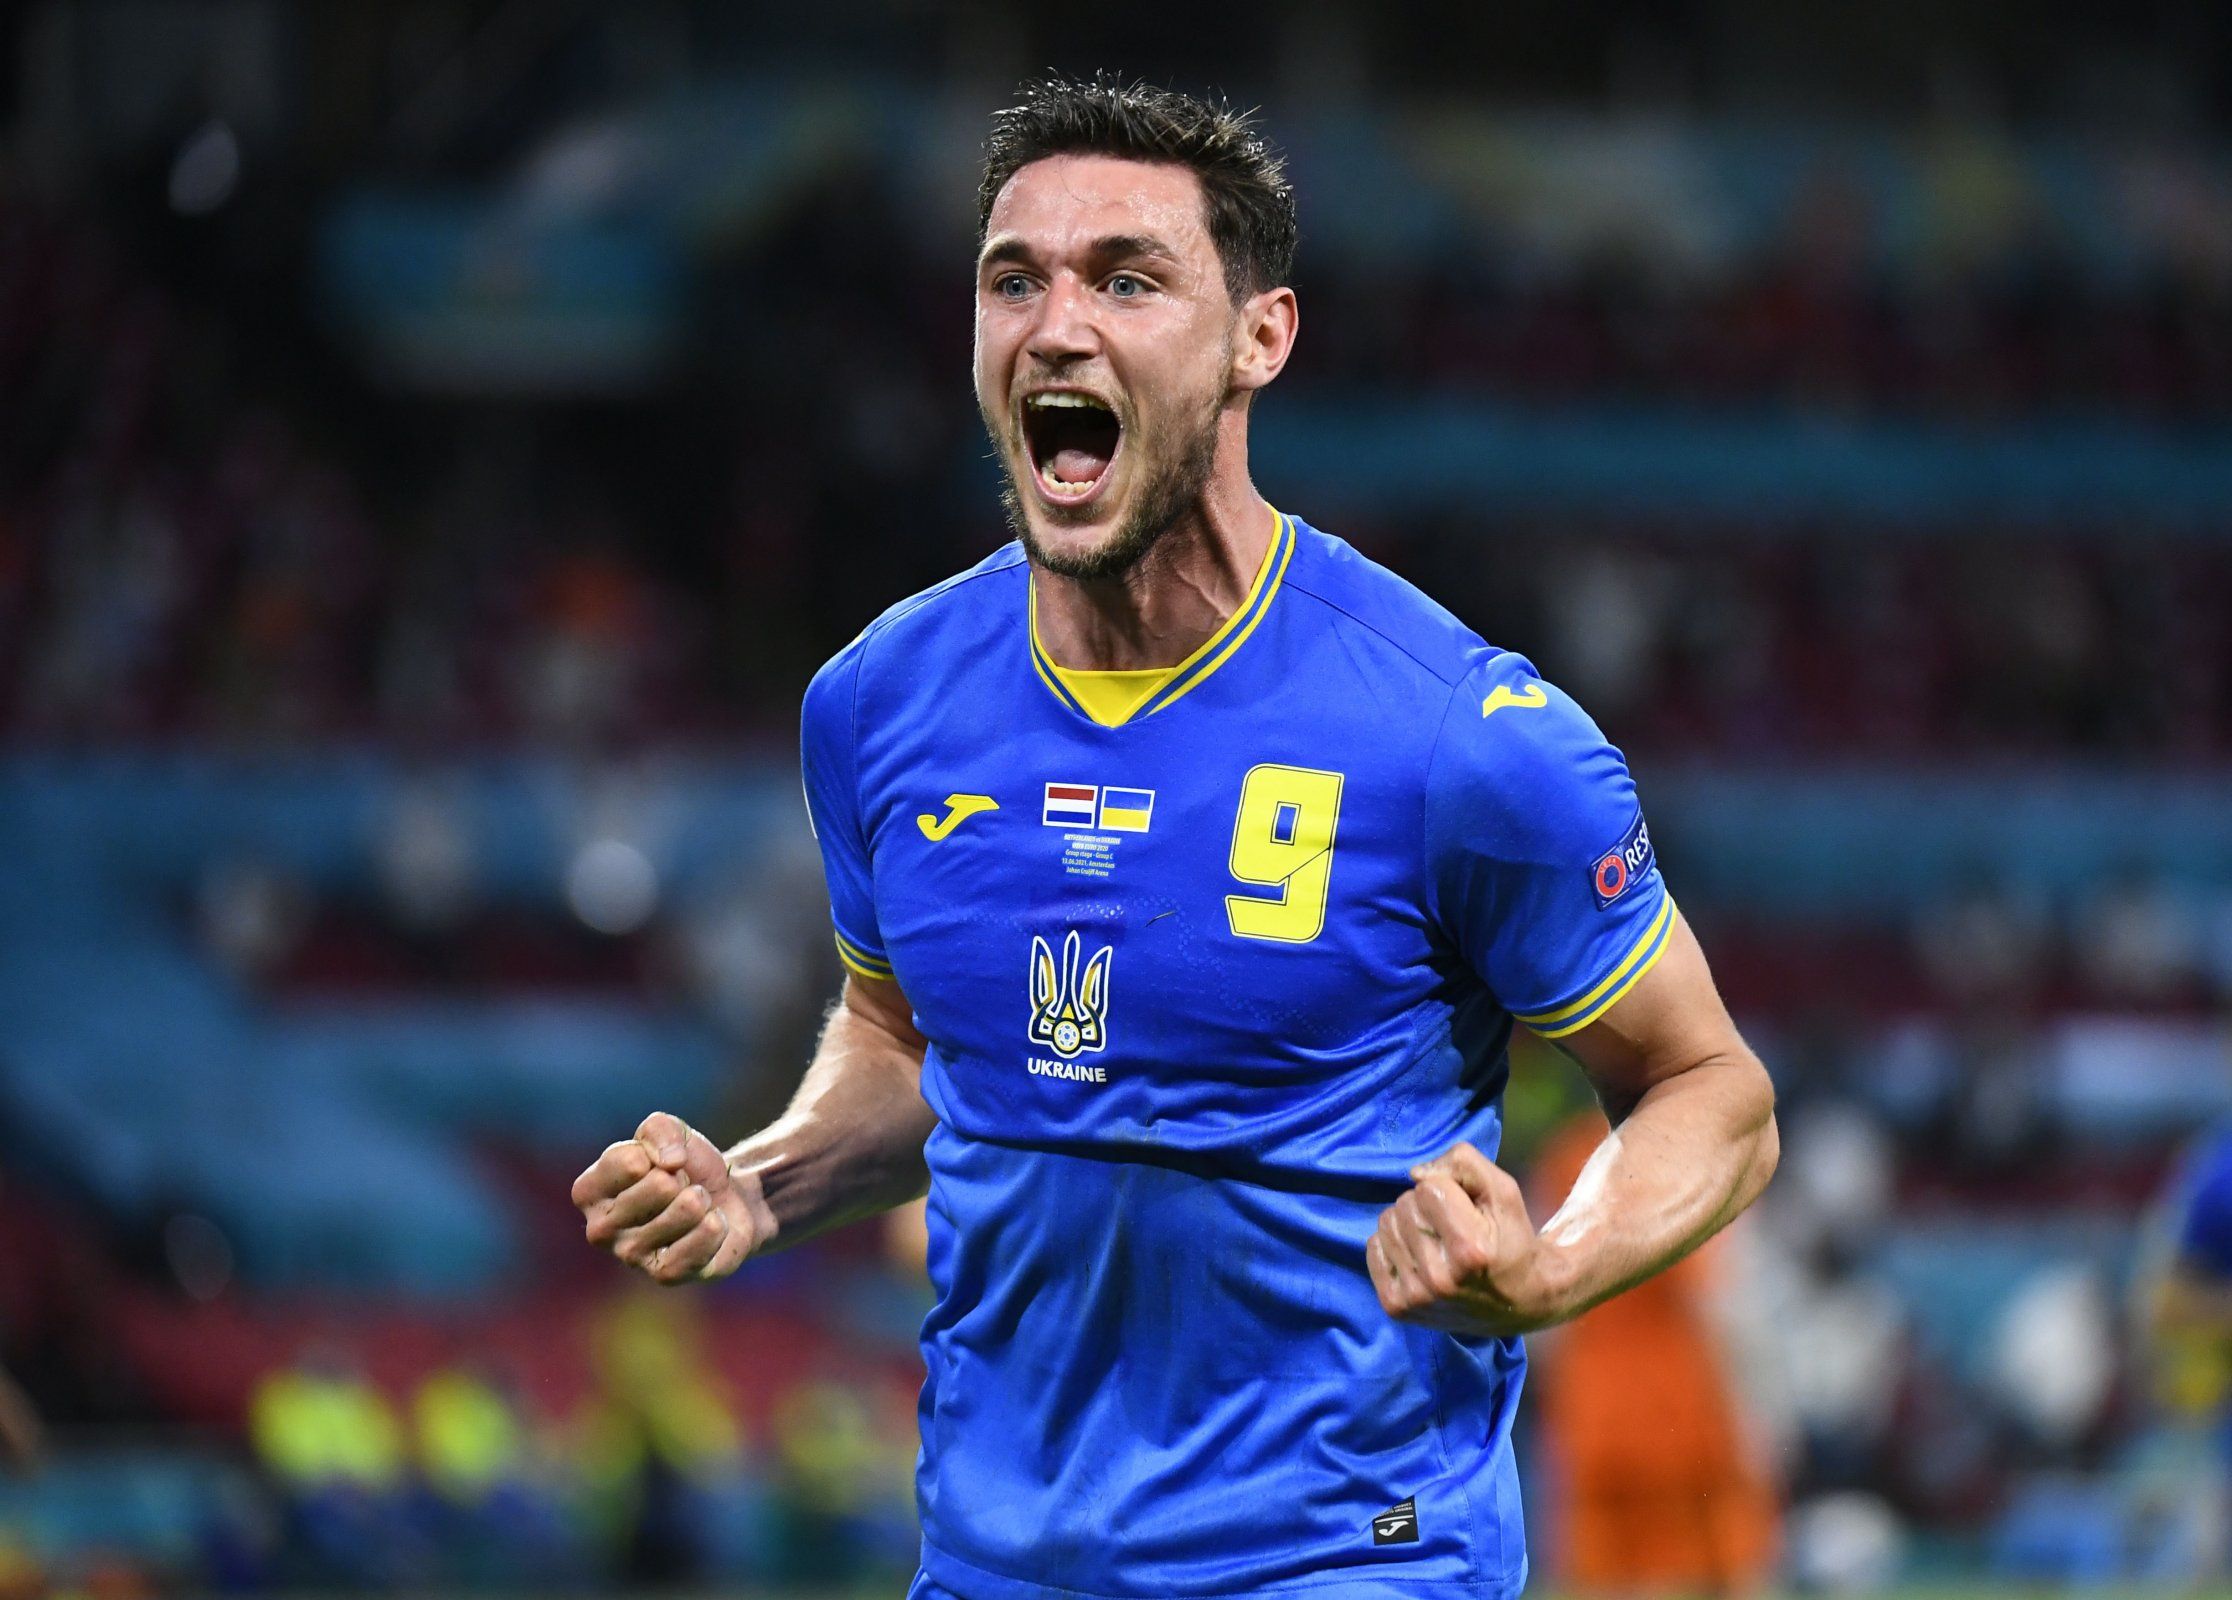 ukraine striker roman yaremchuk celebrates scoring against netherlands at euro 2020